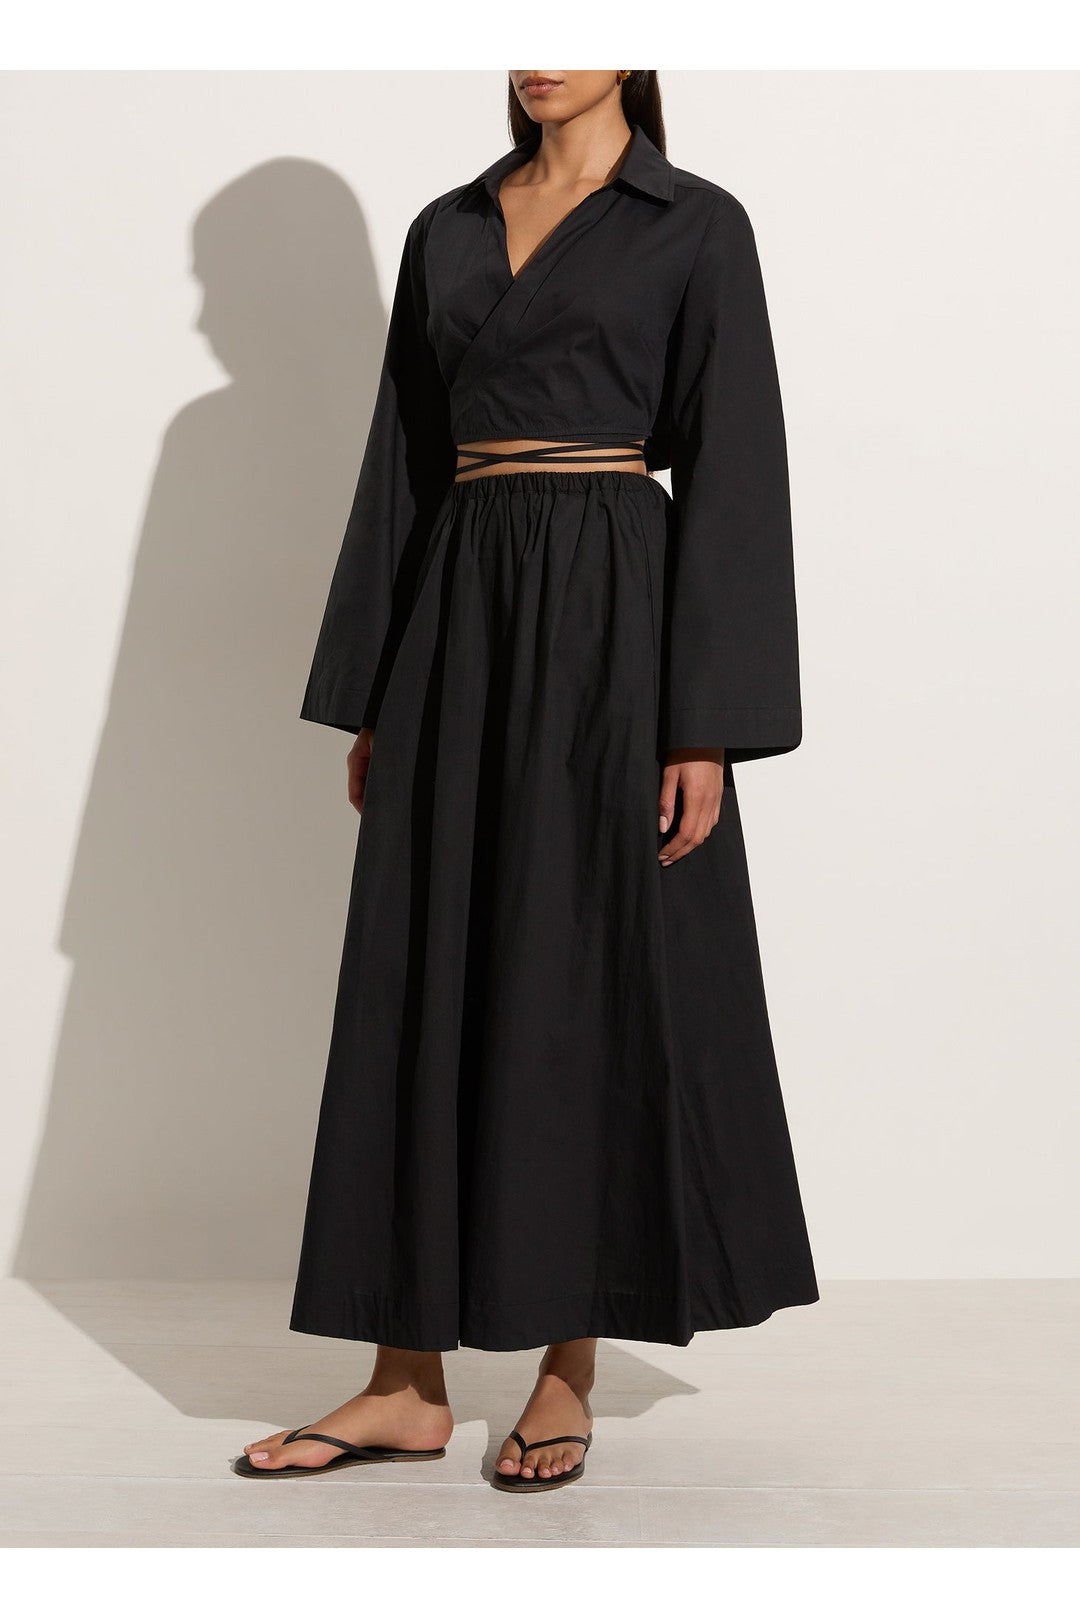 Scanno skirt, black